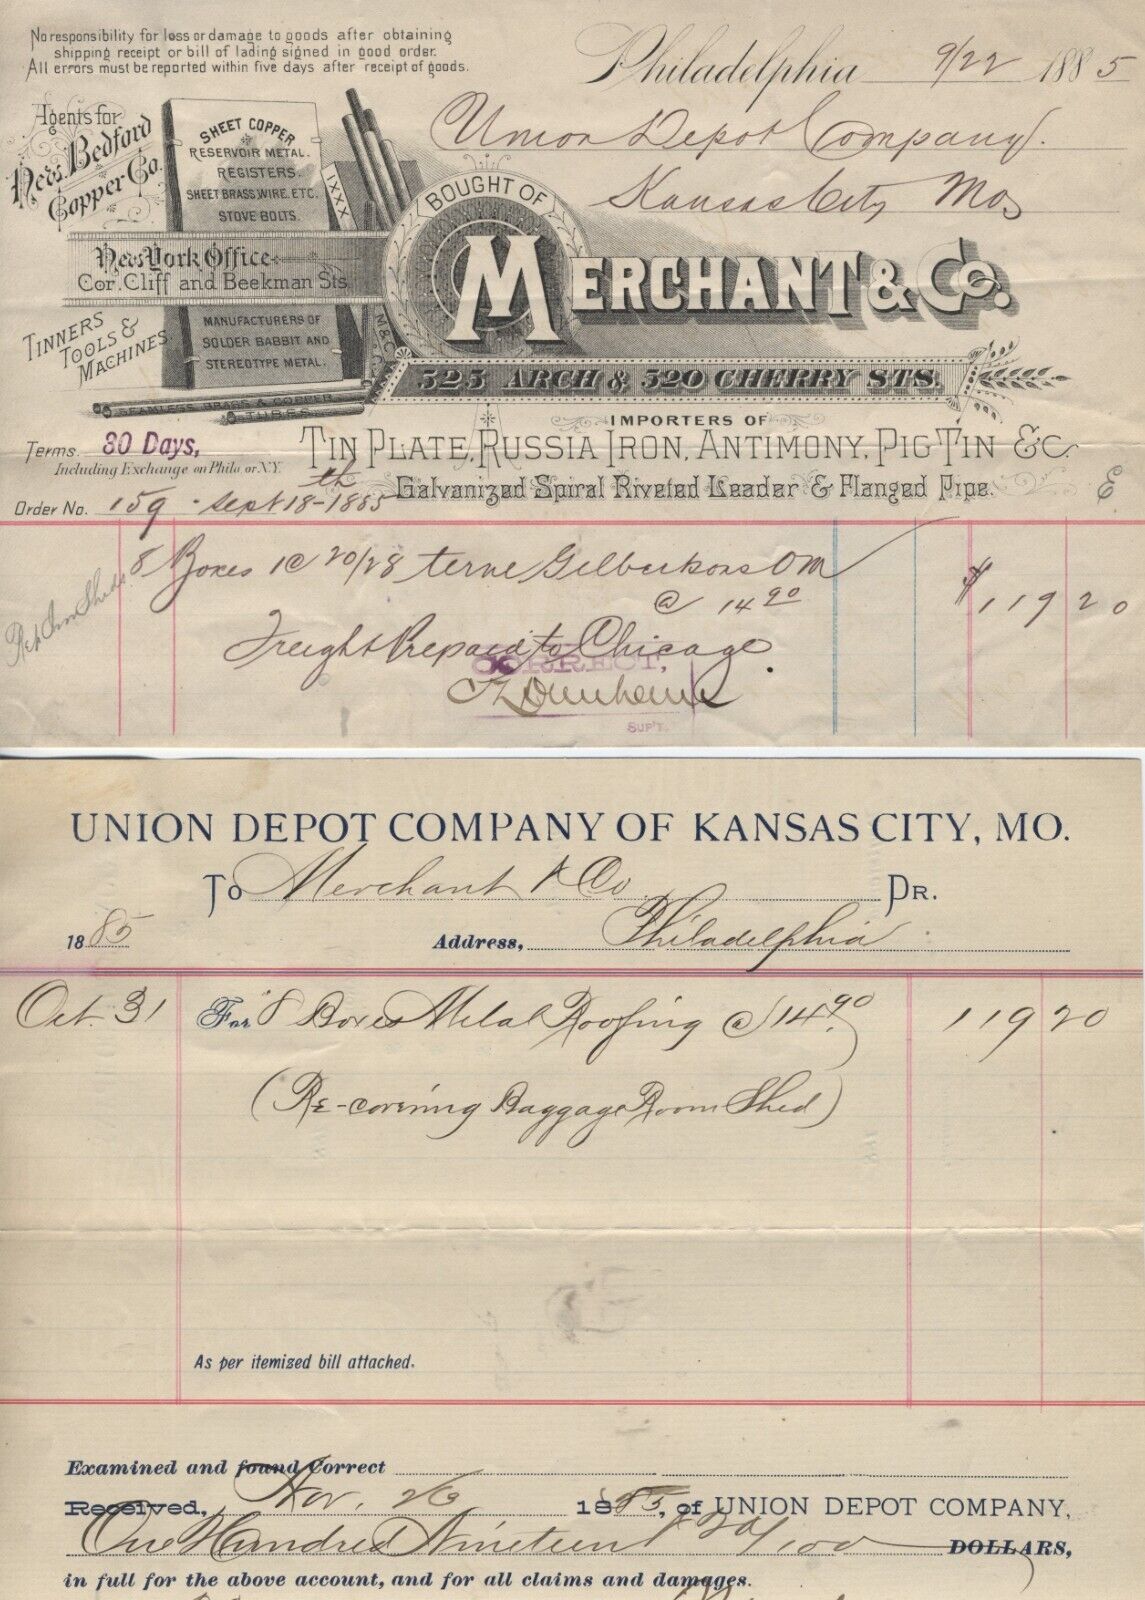 1885 KANSAS CITY MISSOURI BILLHEAD & VOUCHER, MERCHANTS & CO. SIGNED NETTLETON